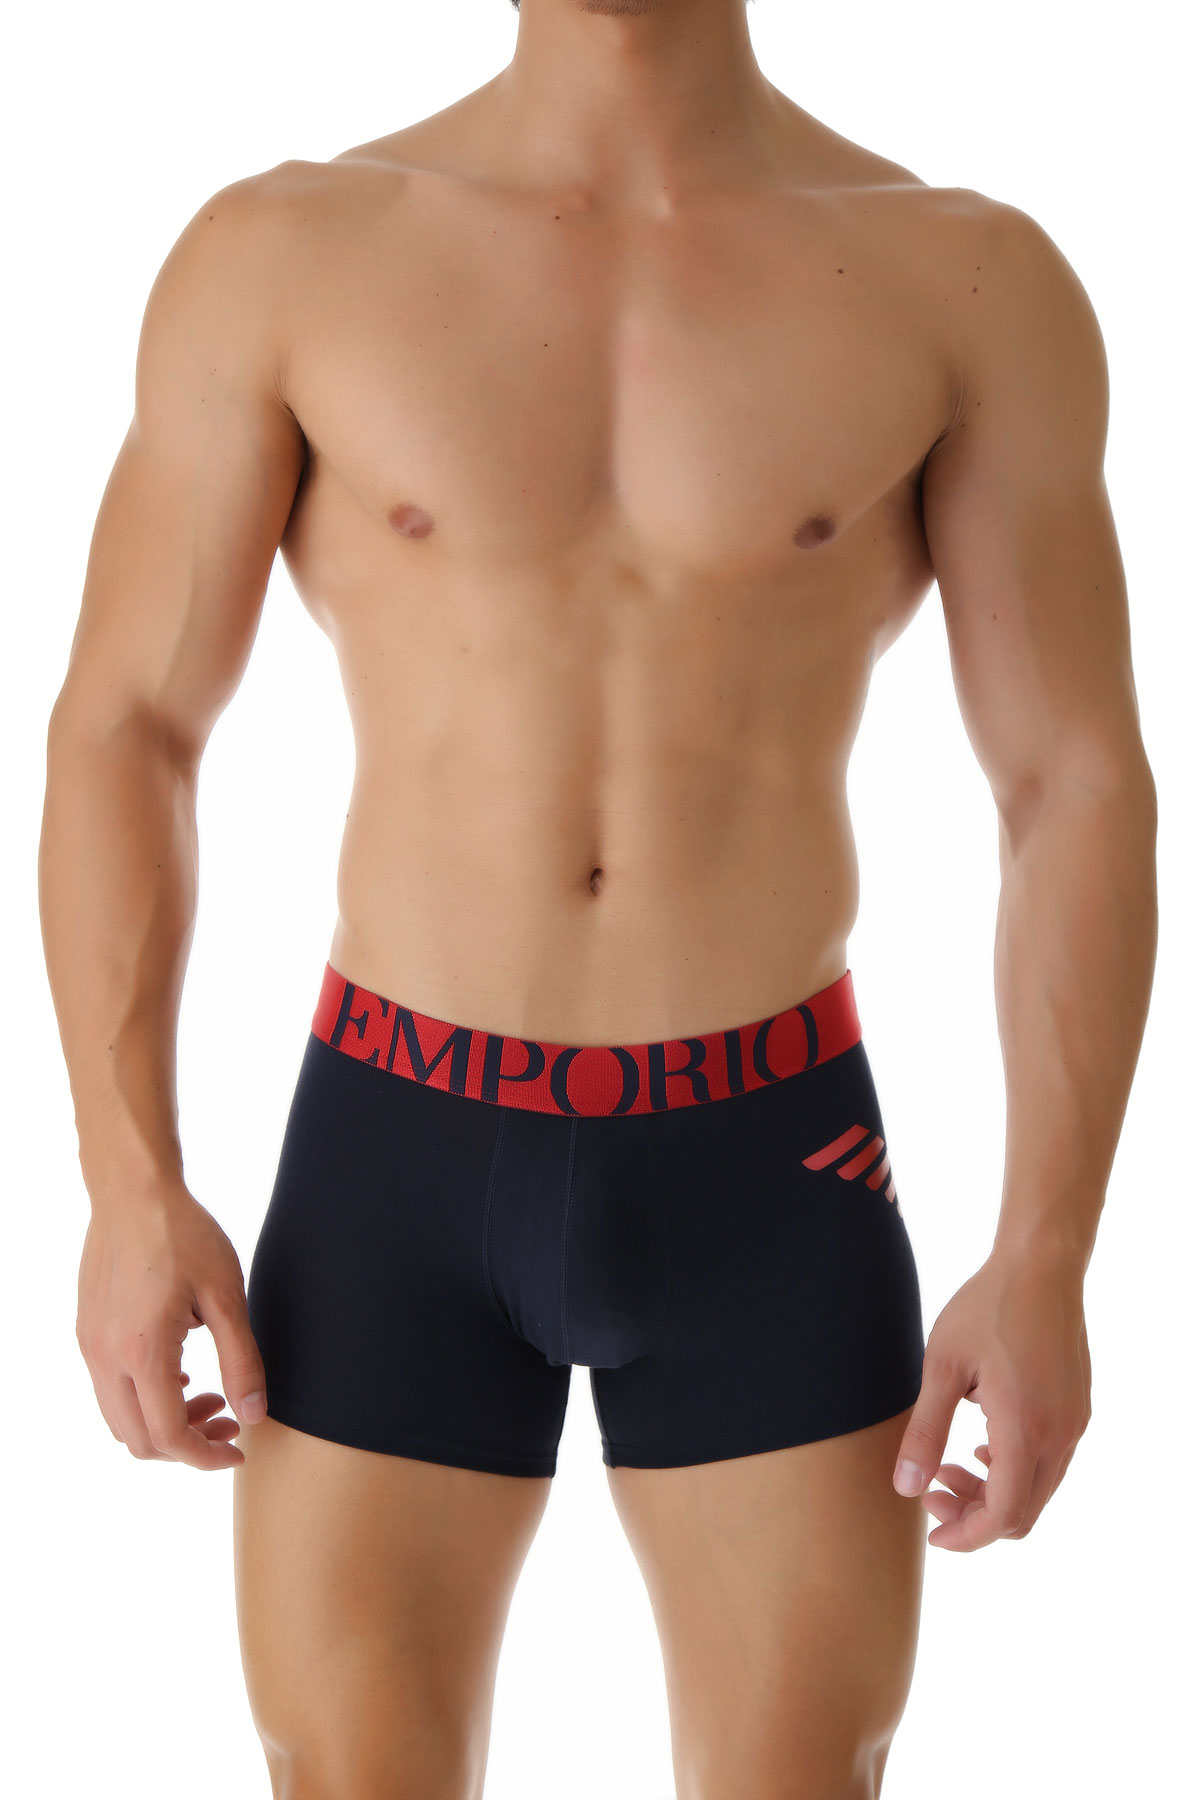 Mens Underwear Emporio Armani Style Code 111776a1 9a725a1 00135